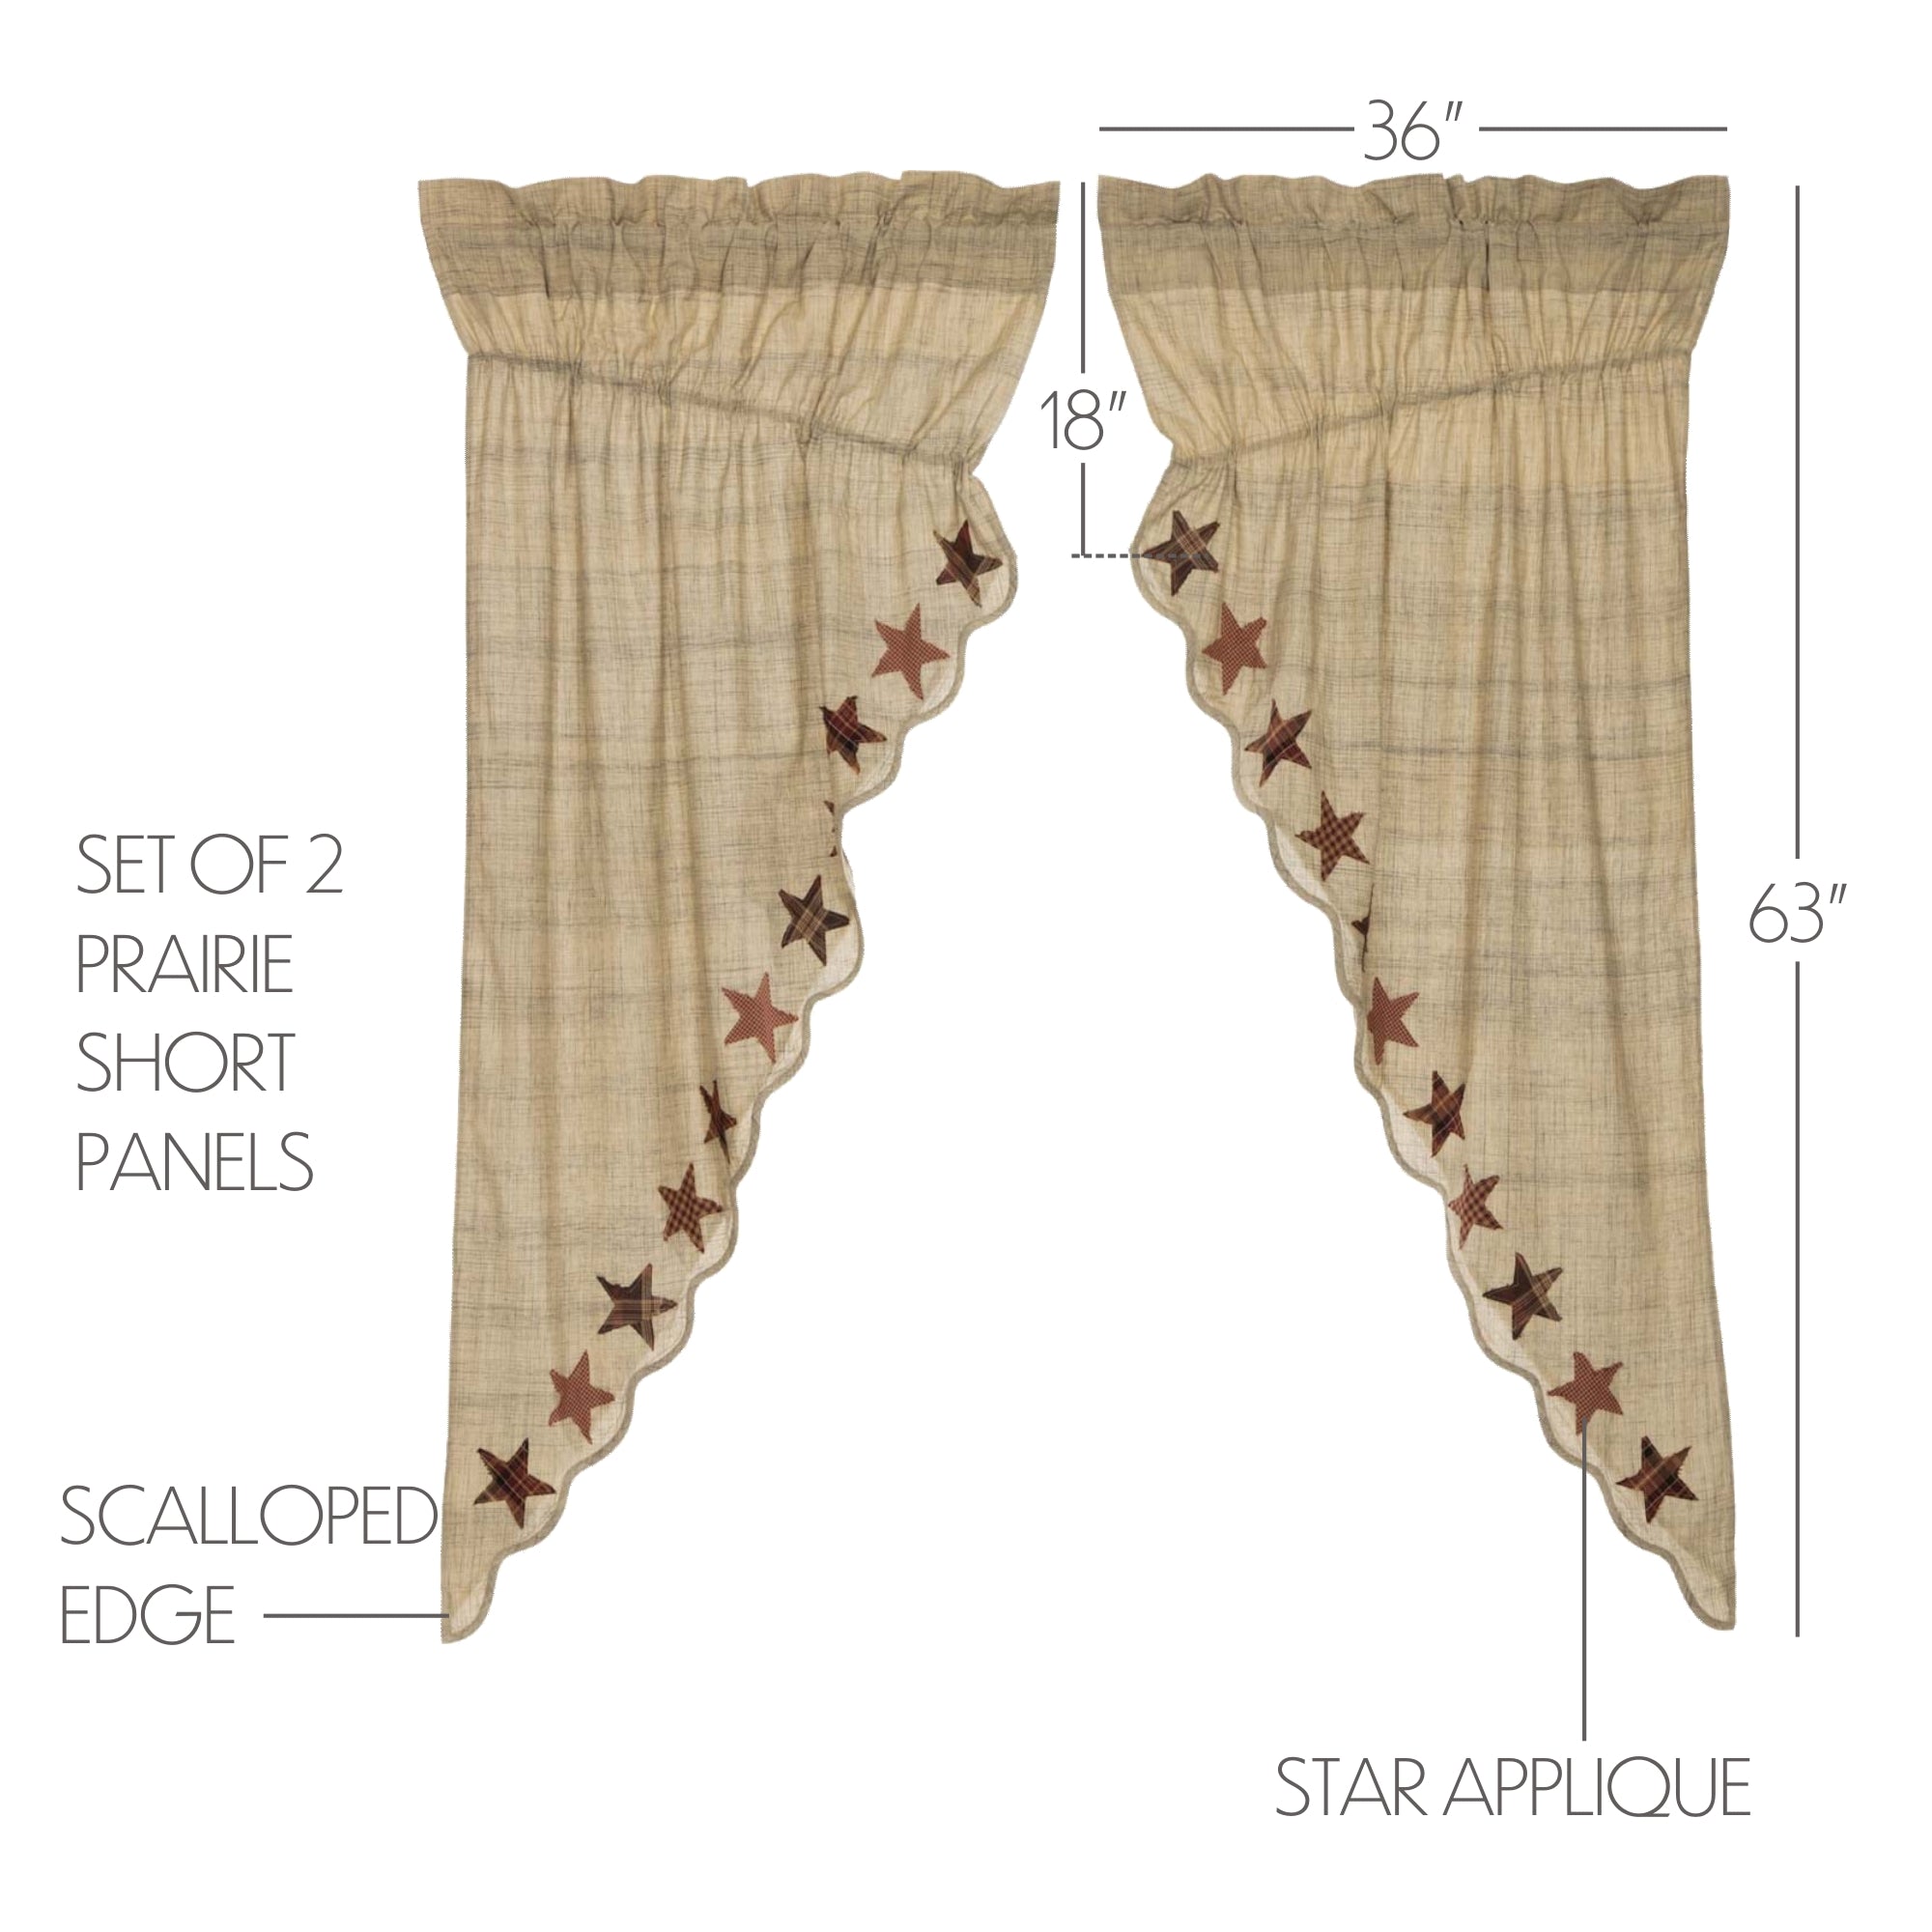 Abilene Star Prairie Short Panel Set of 2 63x36x18 SpadezStore